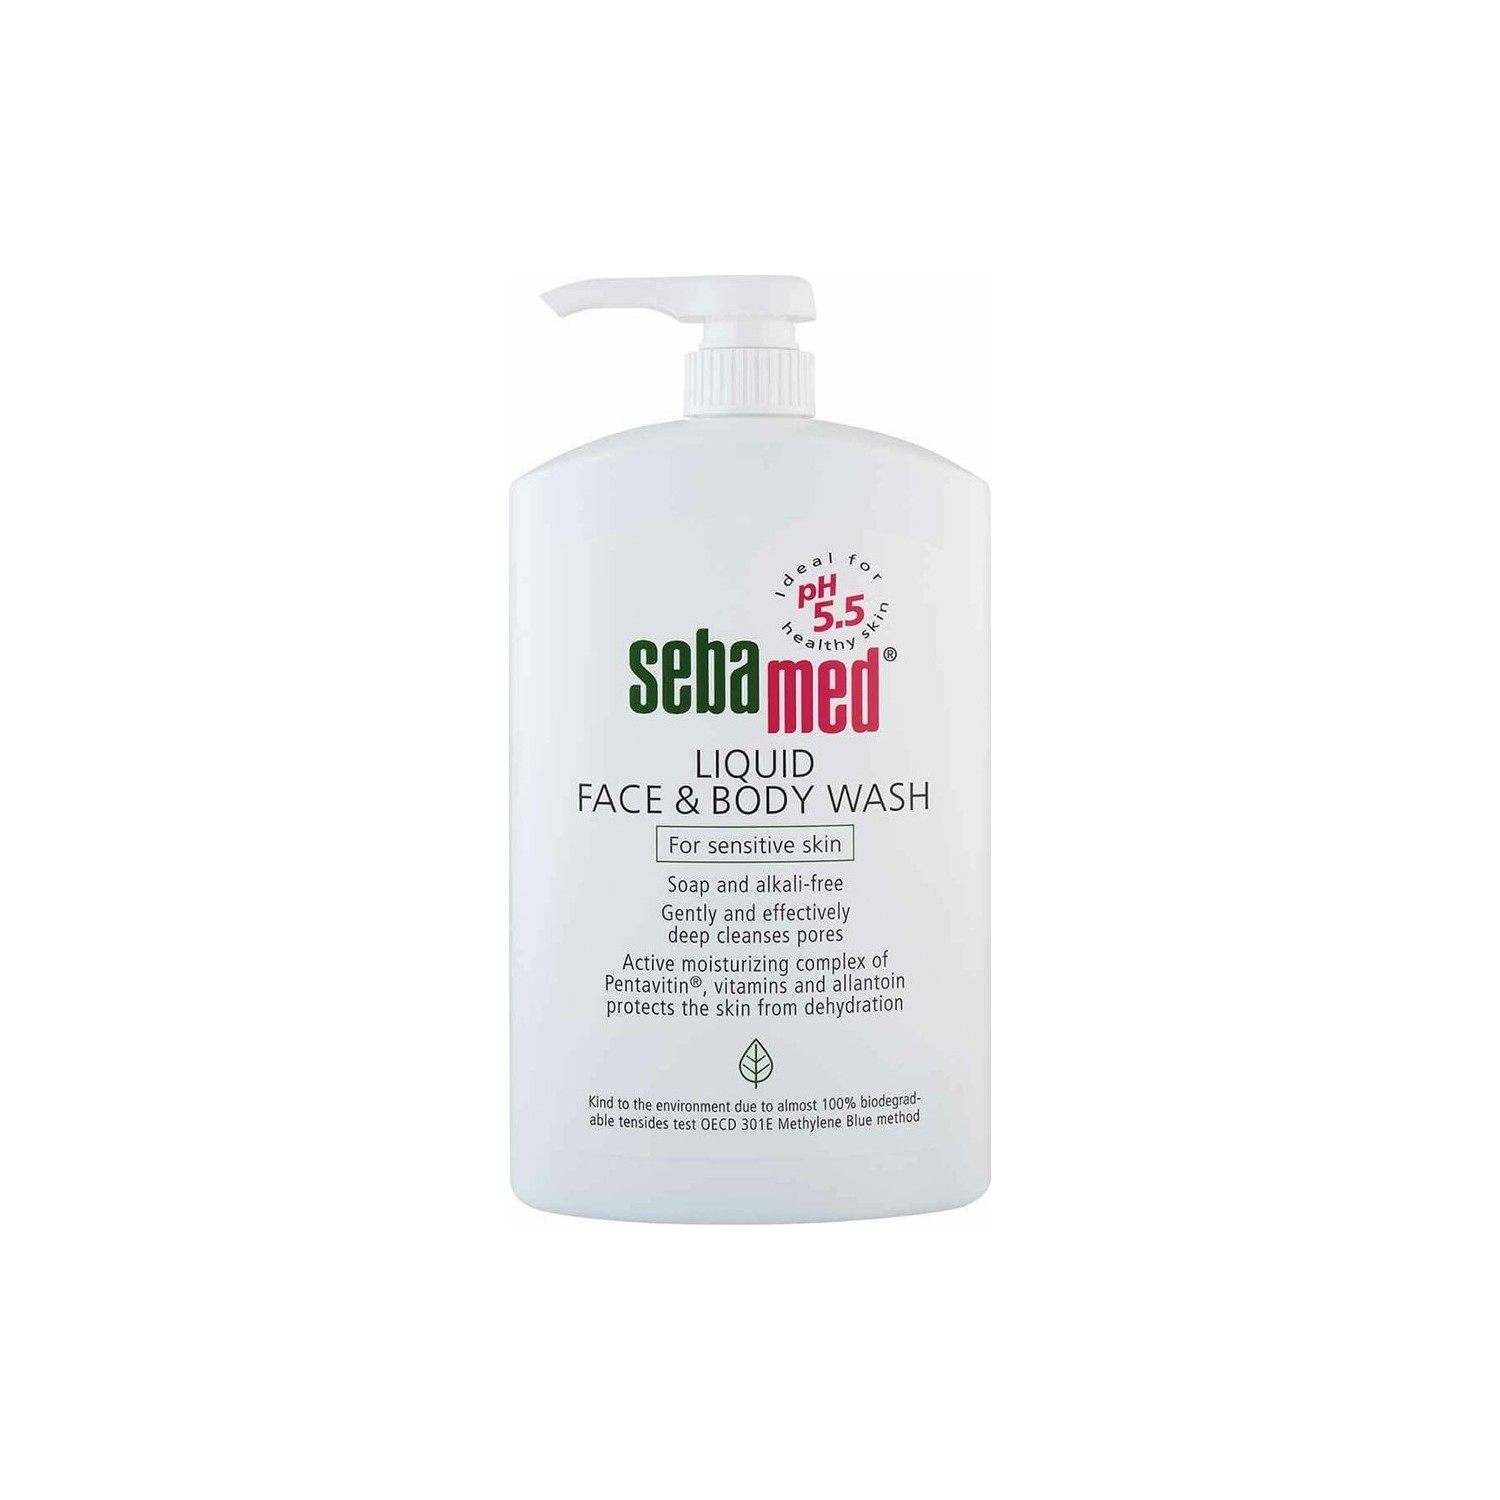 Очищающее средство Sebamed Liquid для лица и тела, 1000 мл цена и фото